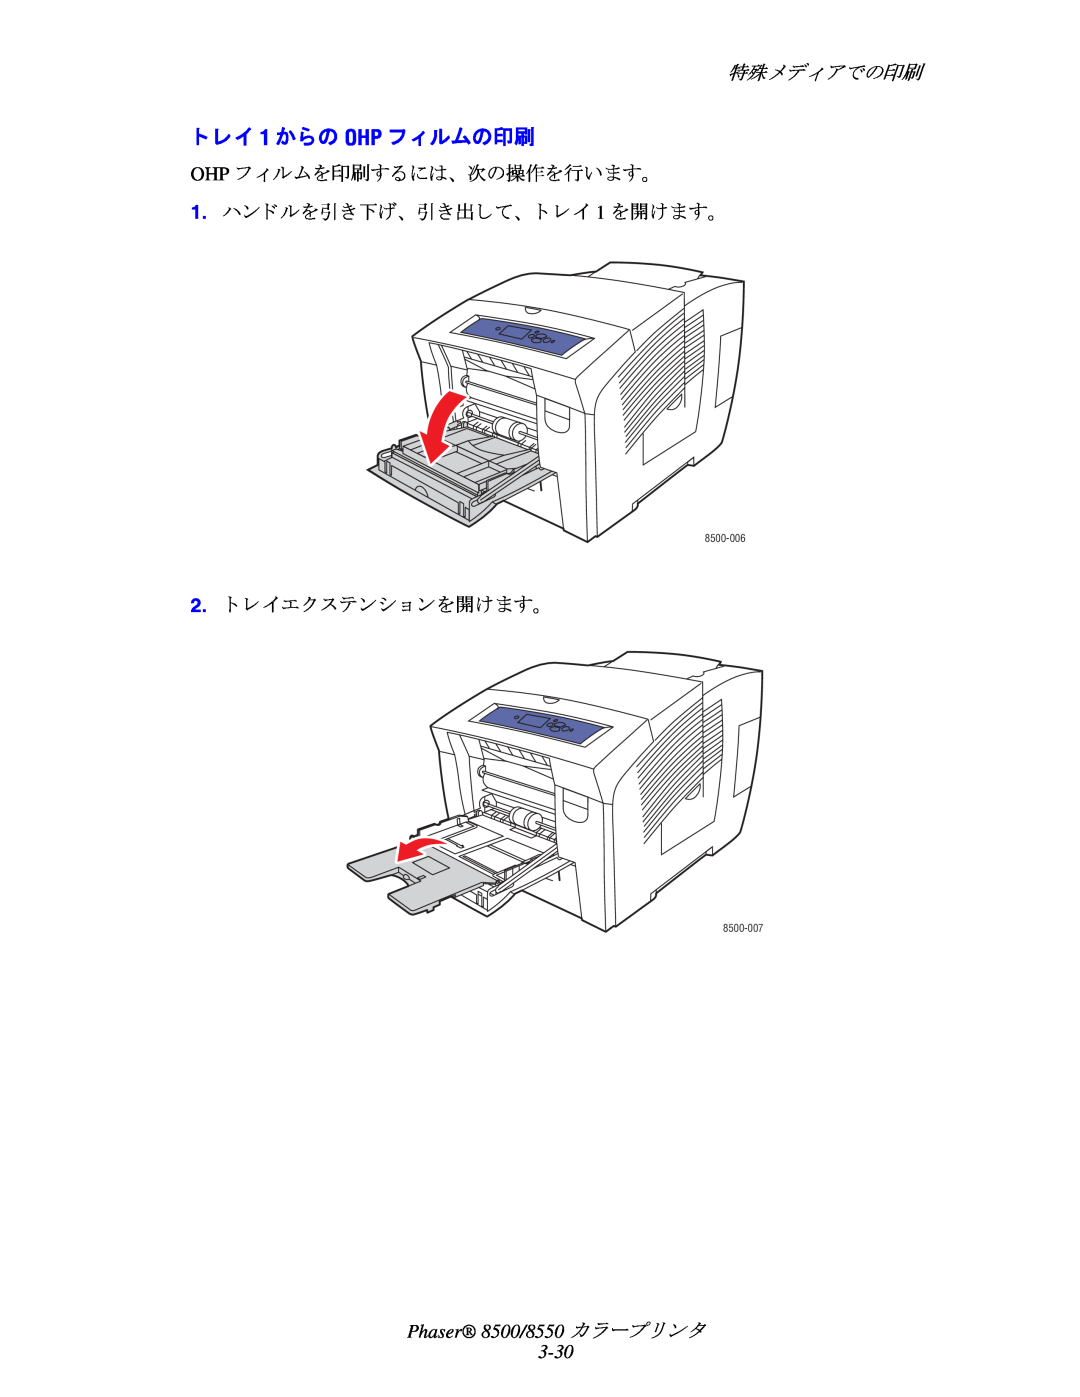 Xerox manual ト レイ 1 からの OHP フ ィ ルムの印刷, 特殊メデ ィ アでの印刷, Phaser 8500/8550 カ ラープ リ ン タ 3-30, 8500-006, 8500-007 